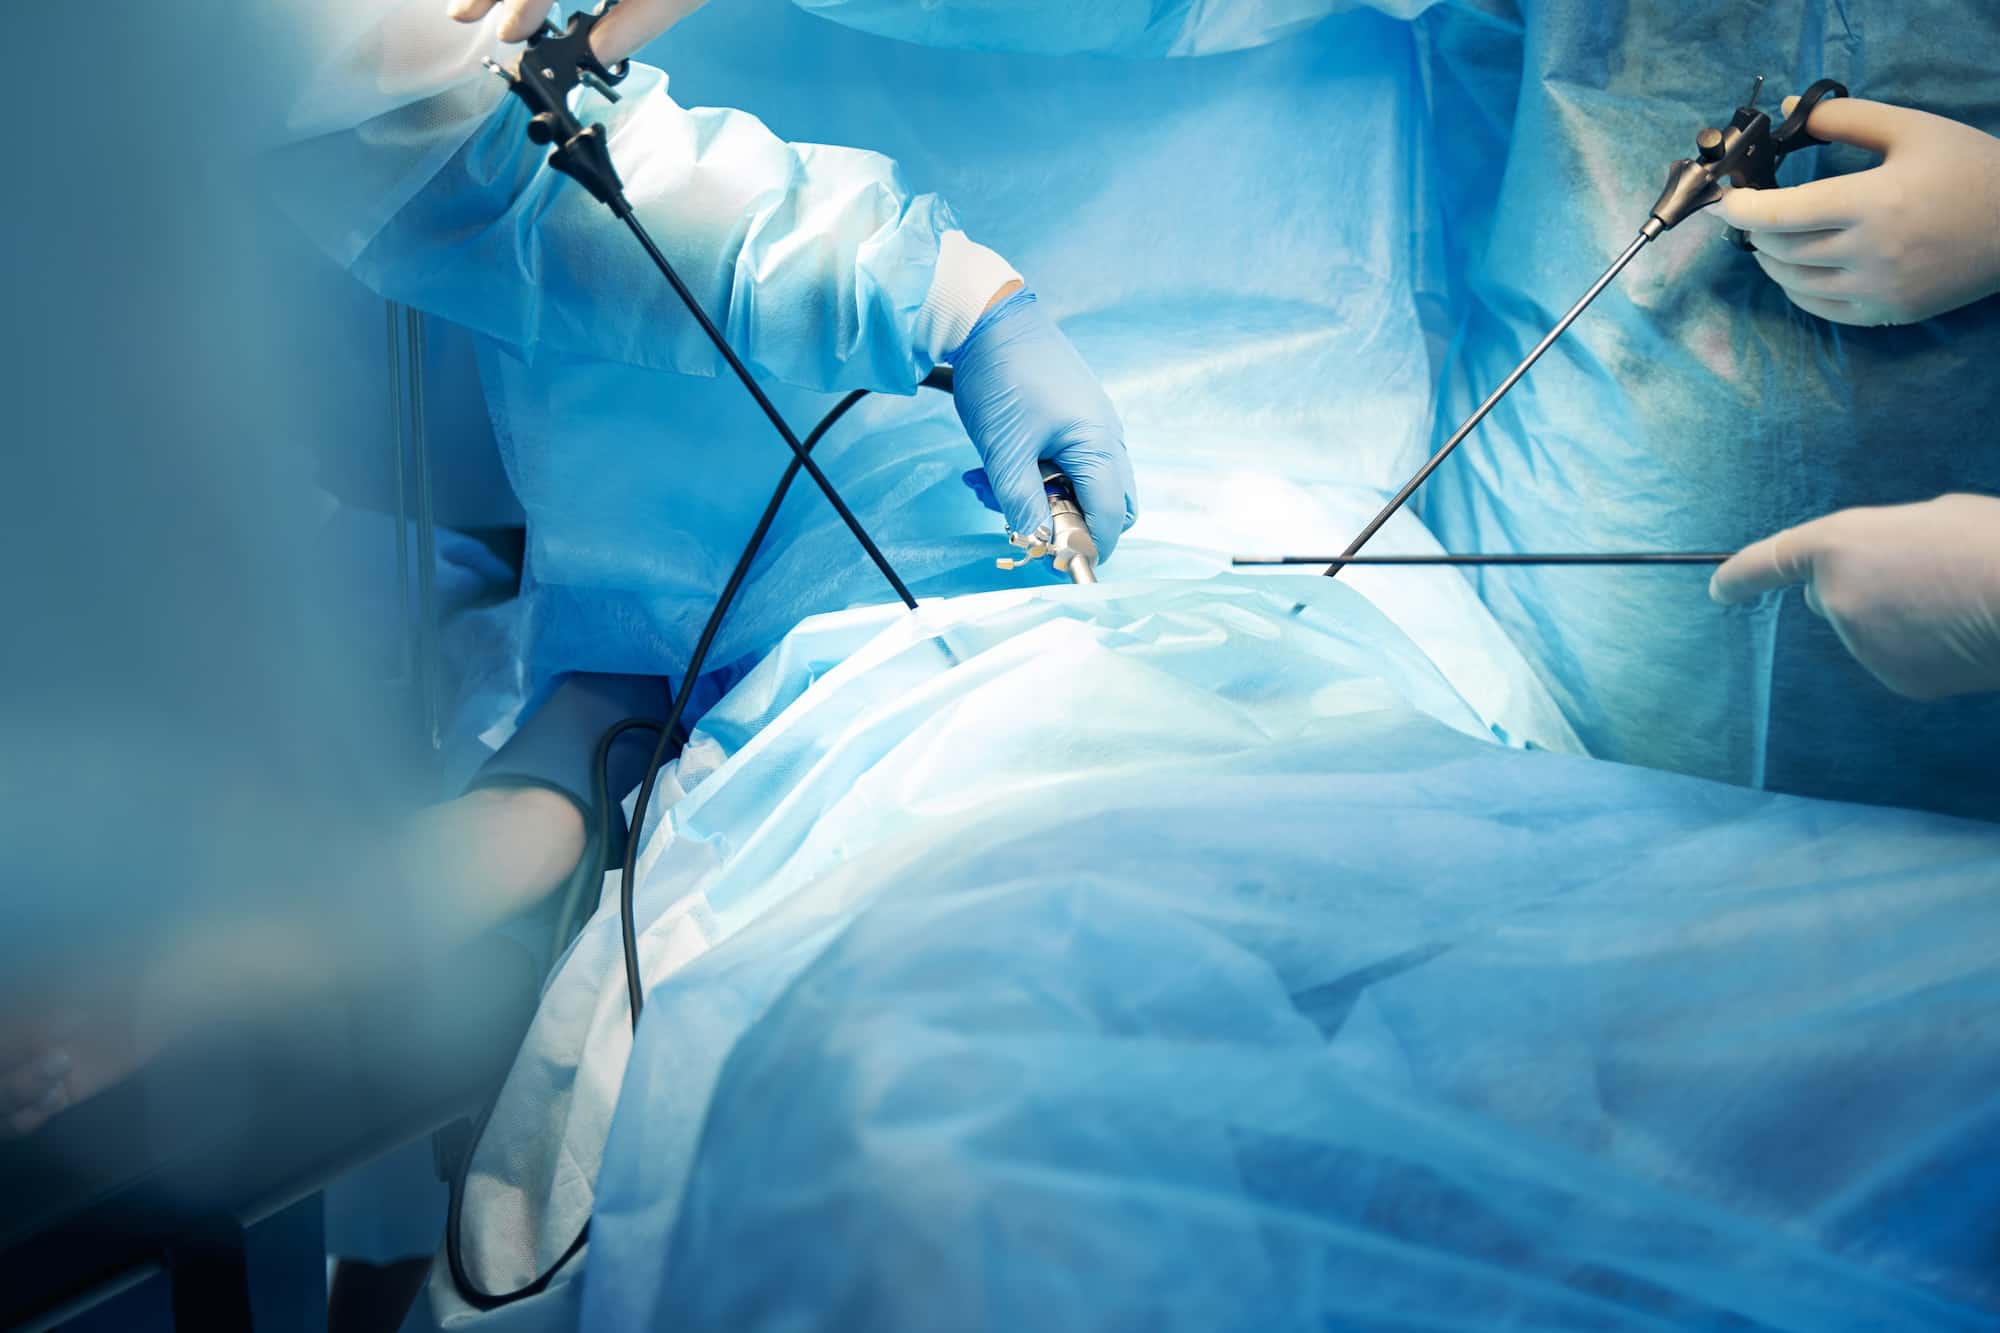 Turkiye laparoscopic sleeve gastrectomy